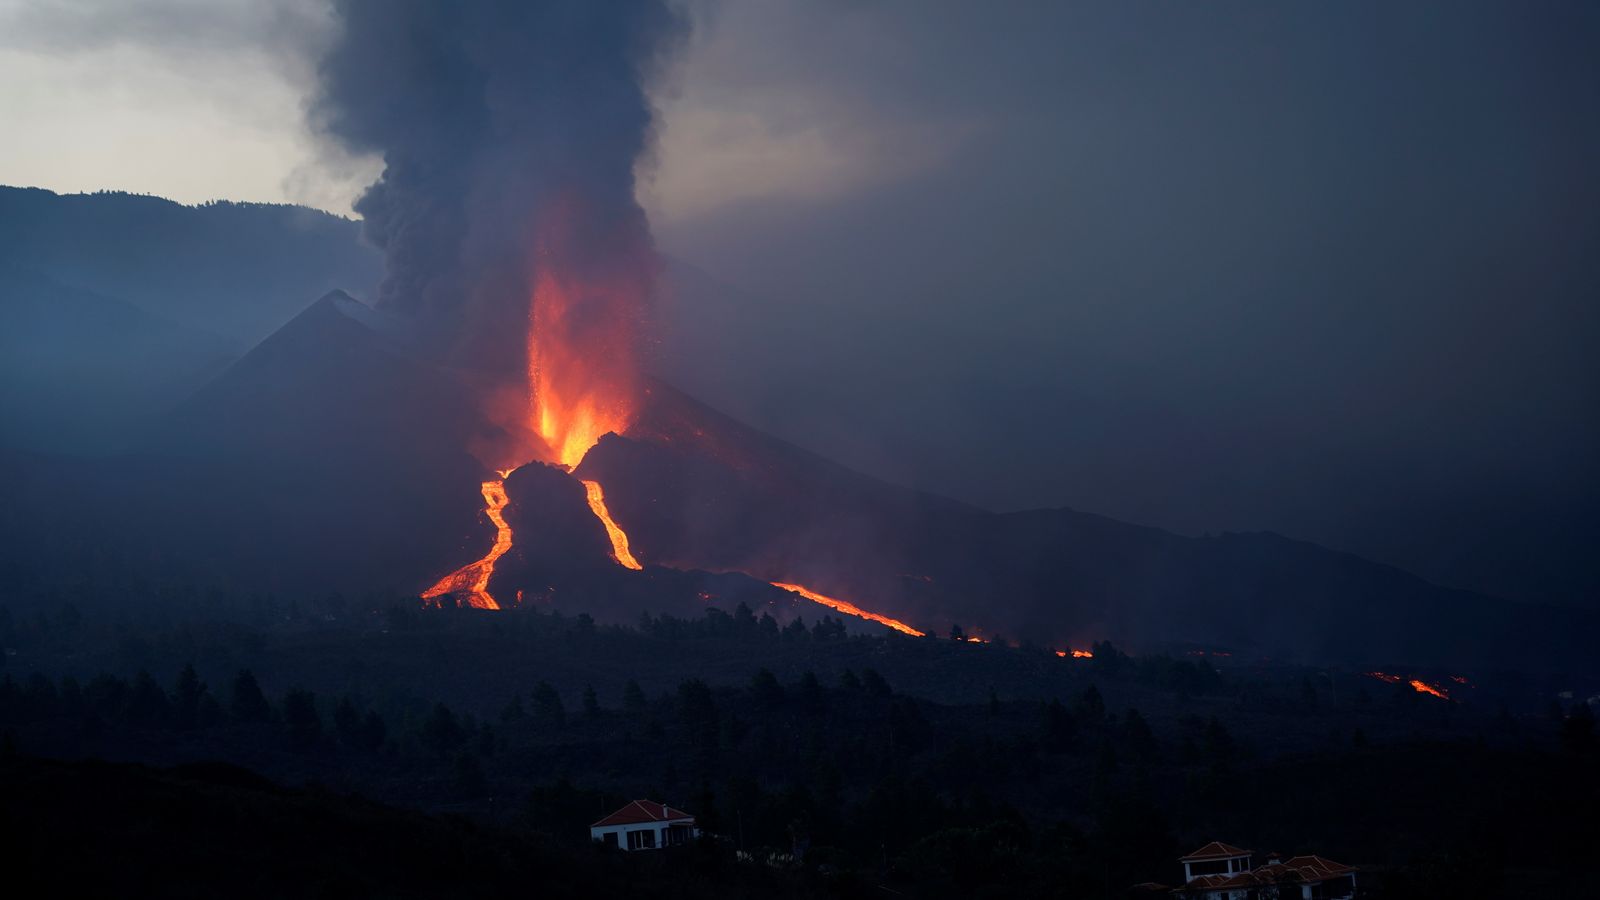 La Palma eruption: Authorities urge calm as new river of lava threatens more destruction